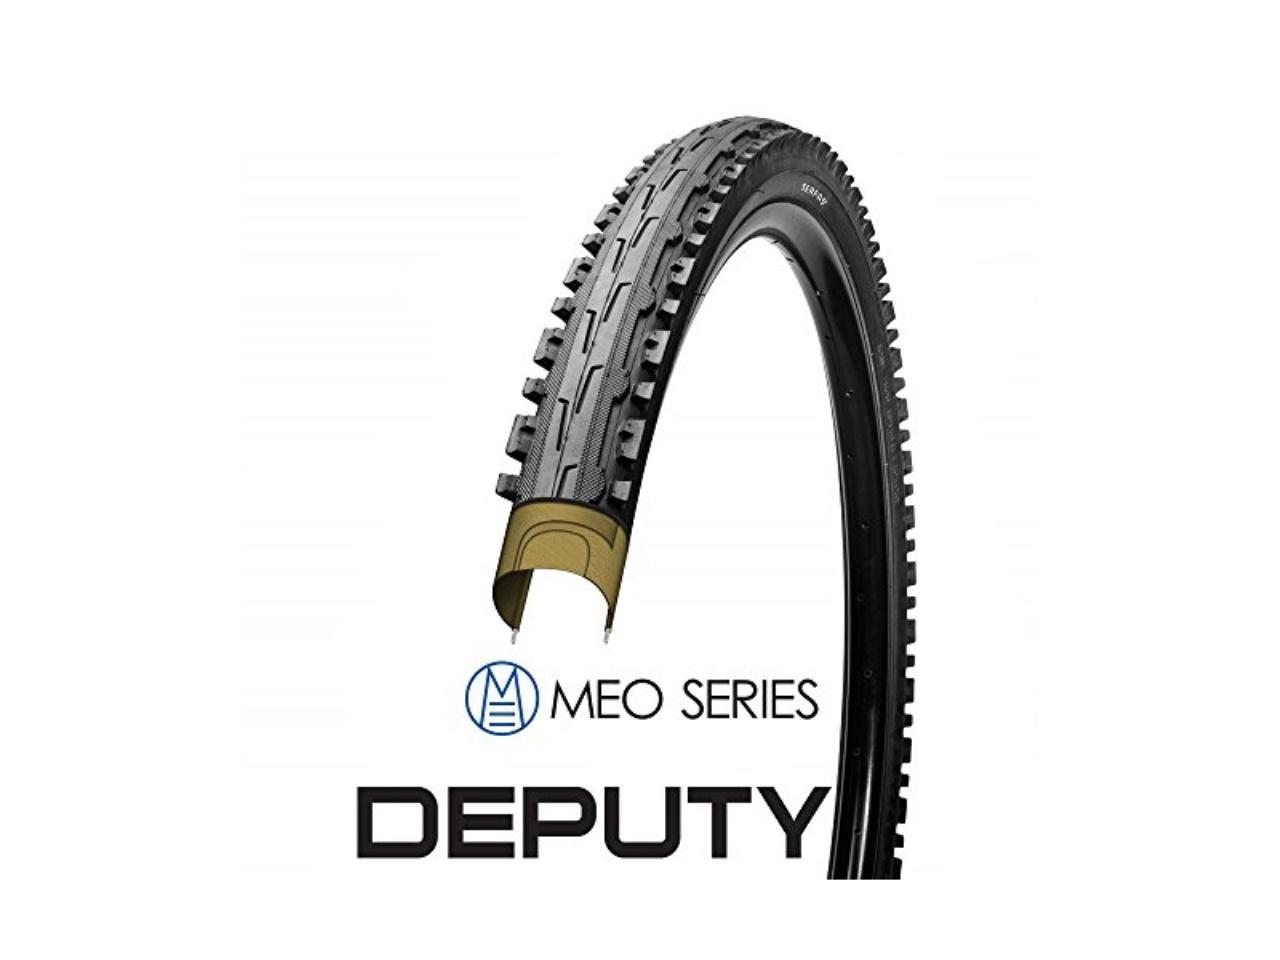 Serfas MEO Deputy Mountain Bike Tire (26 X 1.95) - Newegg.com